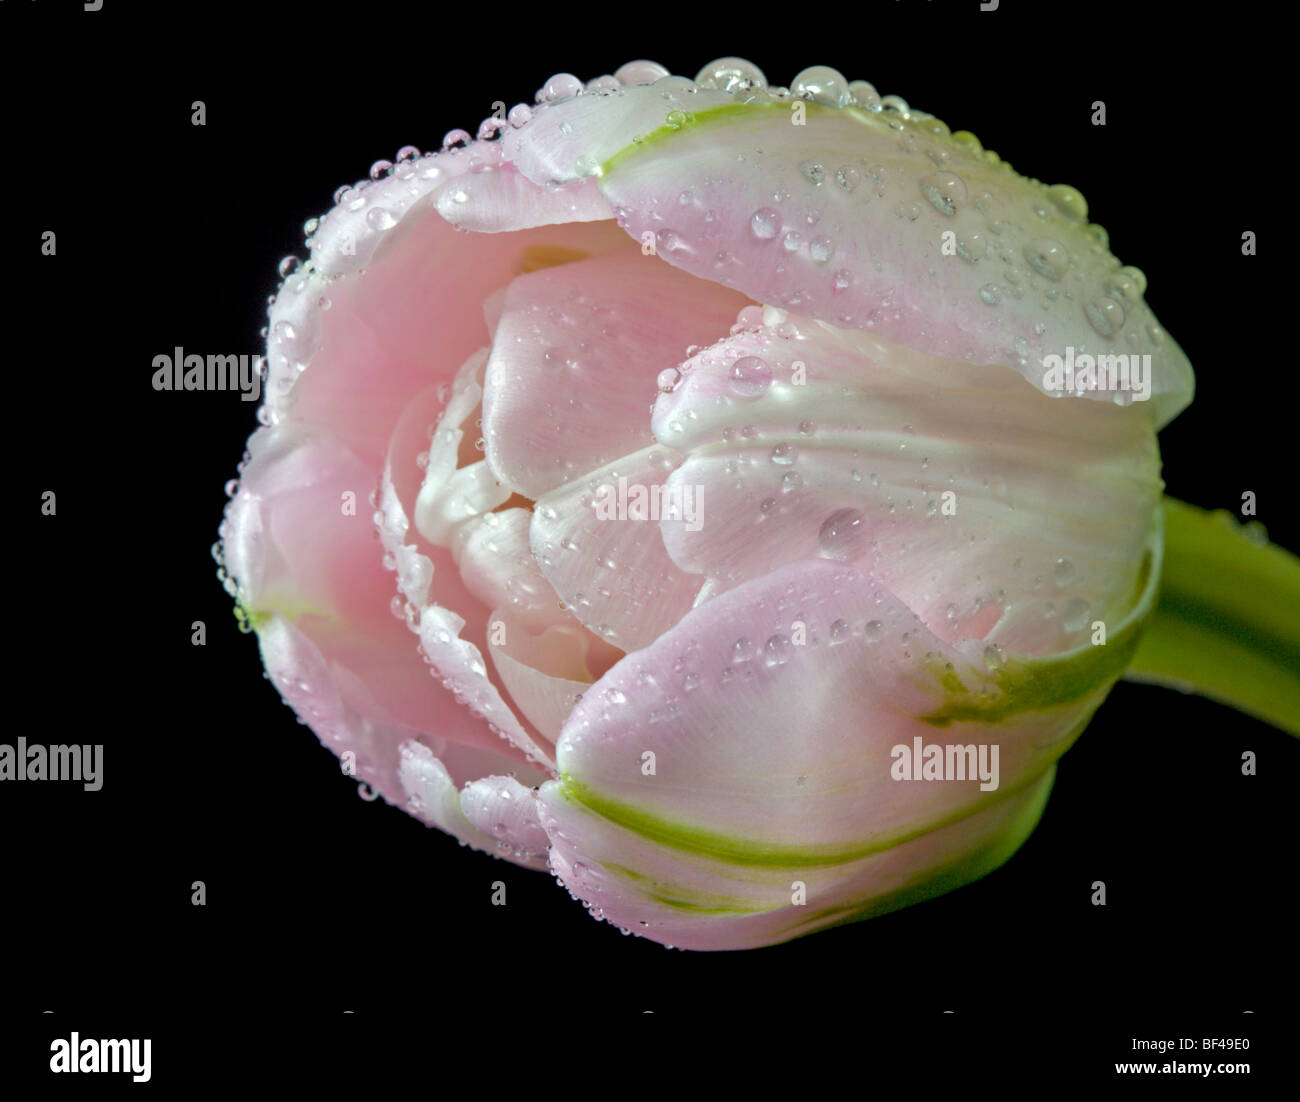 Pink Tulip Foto Stock